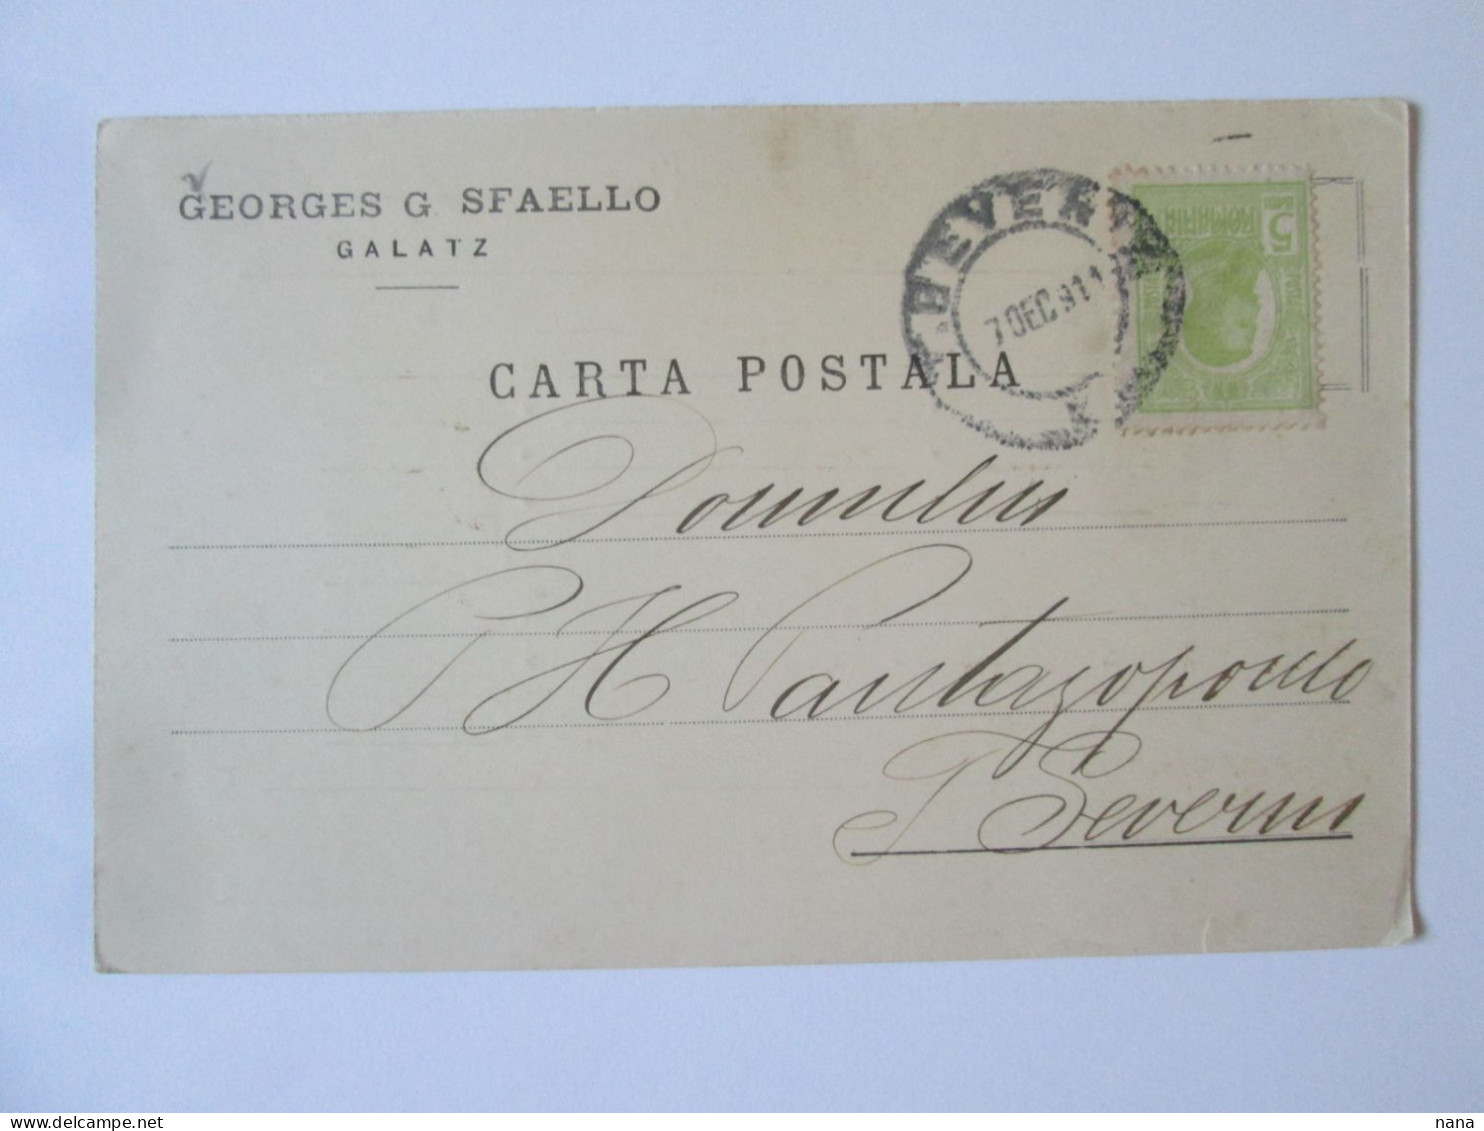 Roumanie Entier Postal Georges Sfaello-Galati Voyage 1911/Romania:Galati-Georges Sfaello Stationery Post.1911 Mailed - Briefe U. Dokumente